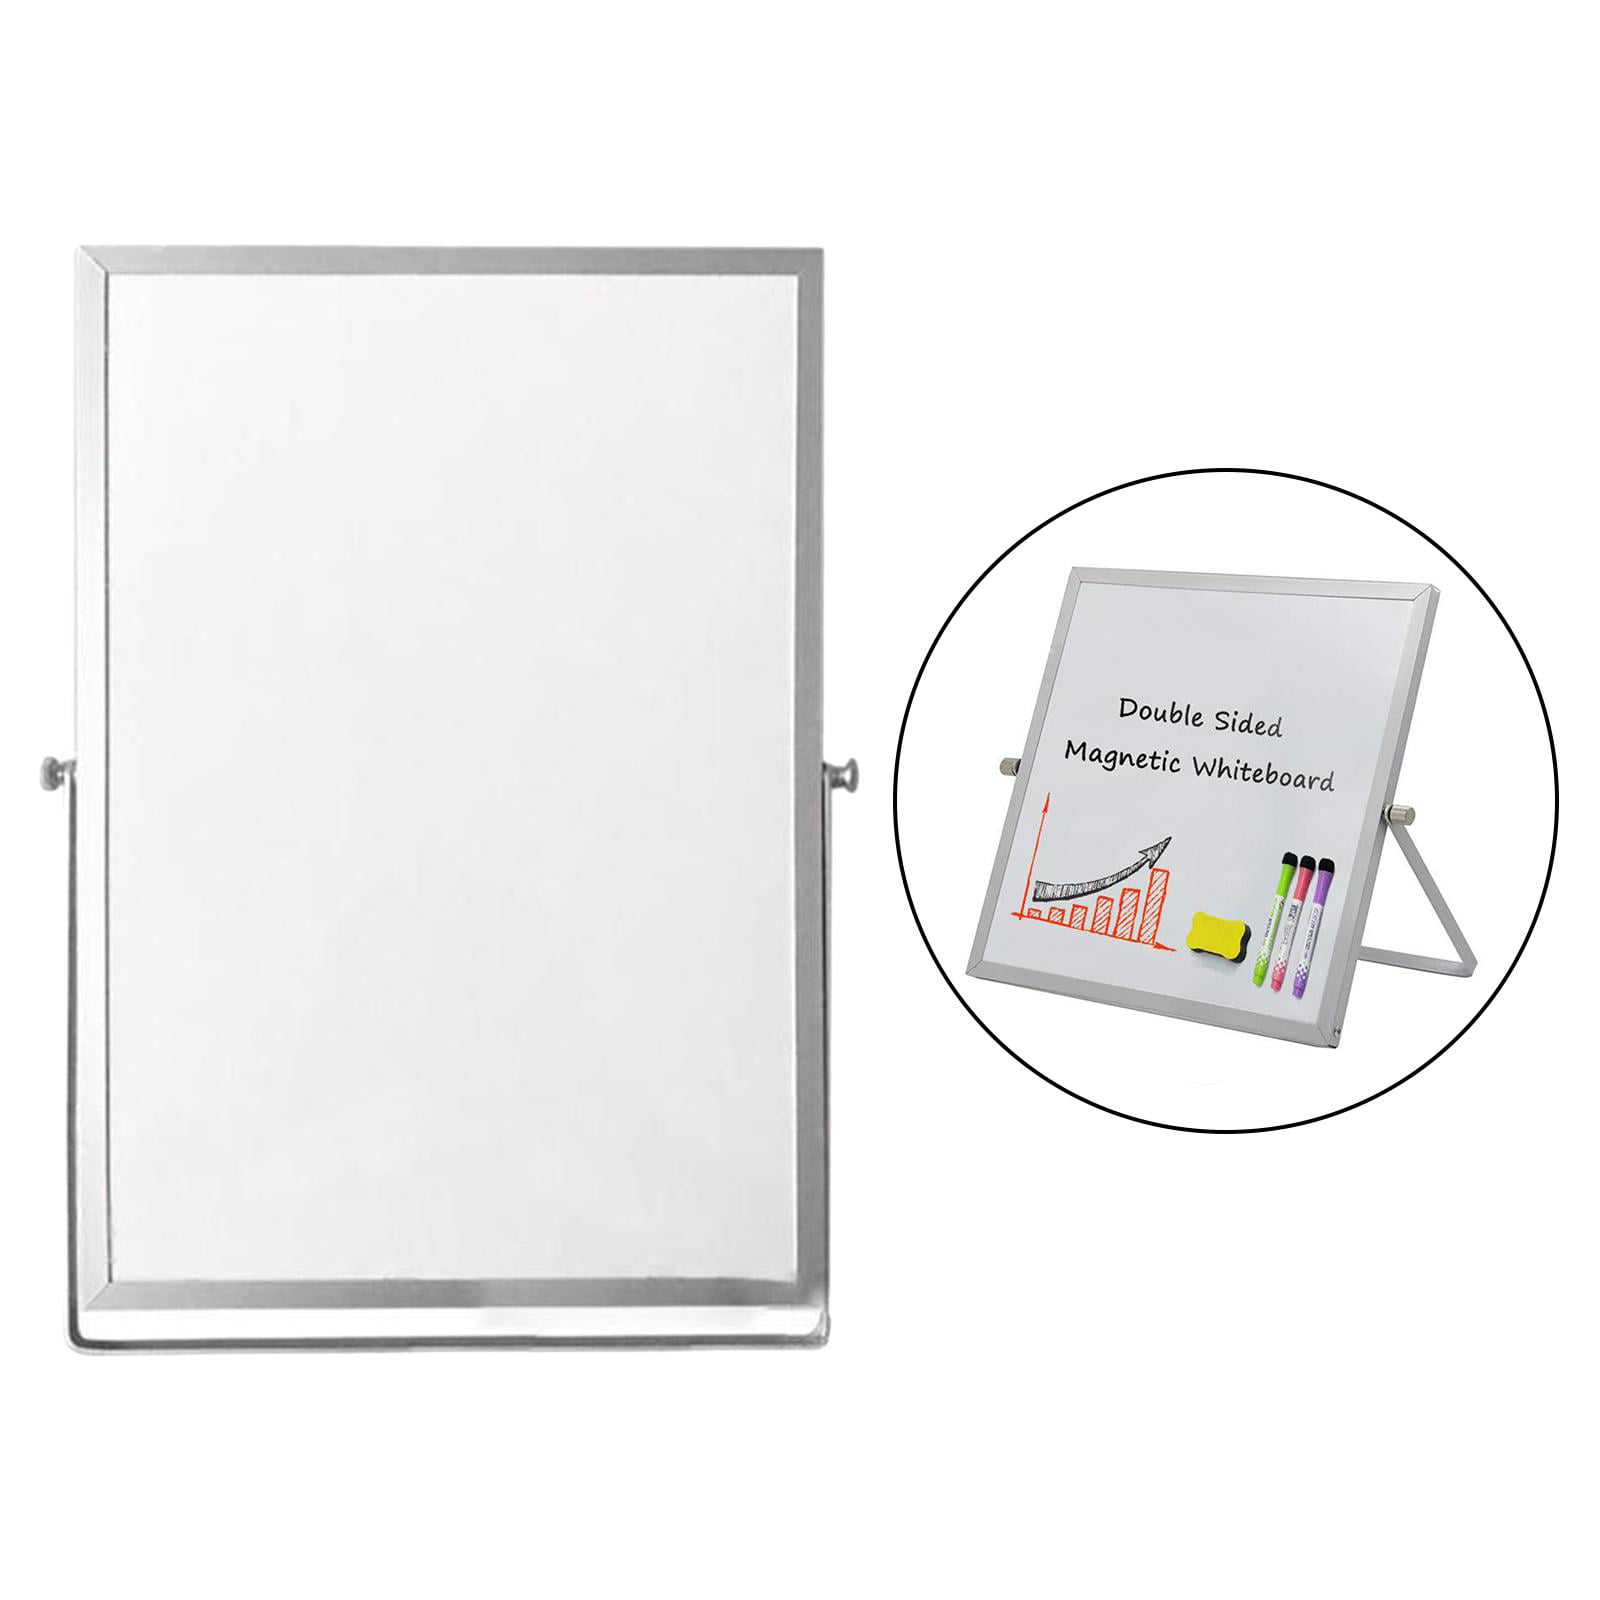 Dry Erase White Board Desktop Memo Board for Home Office School 25x35cm 